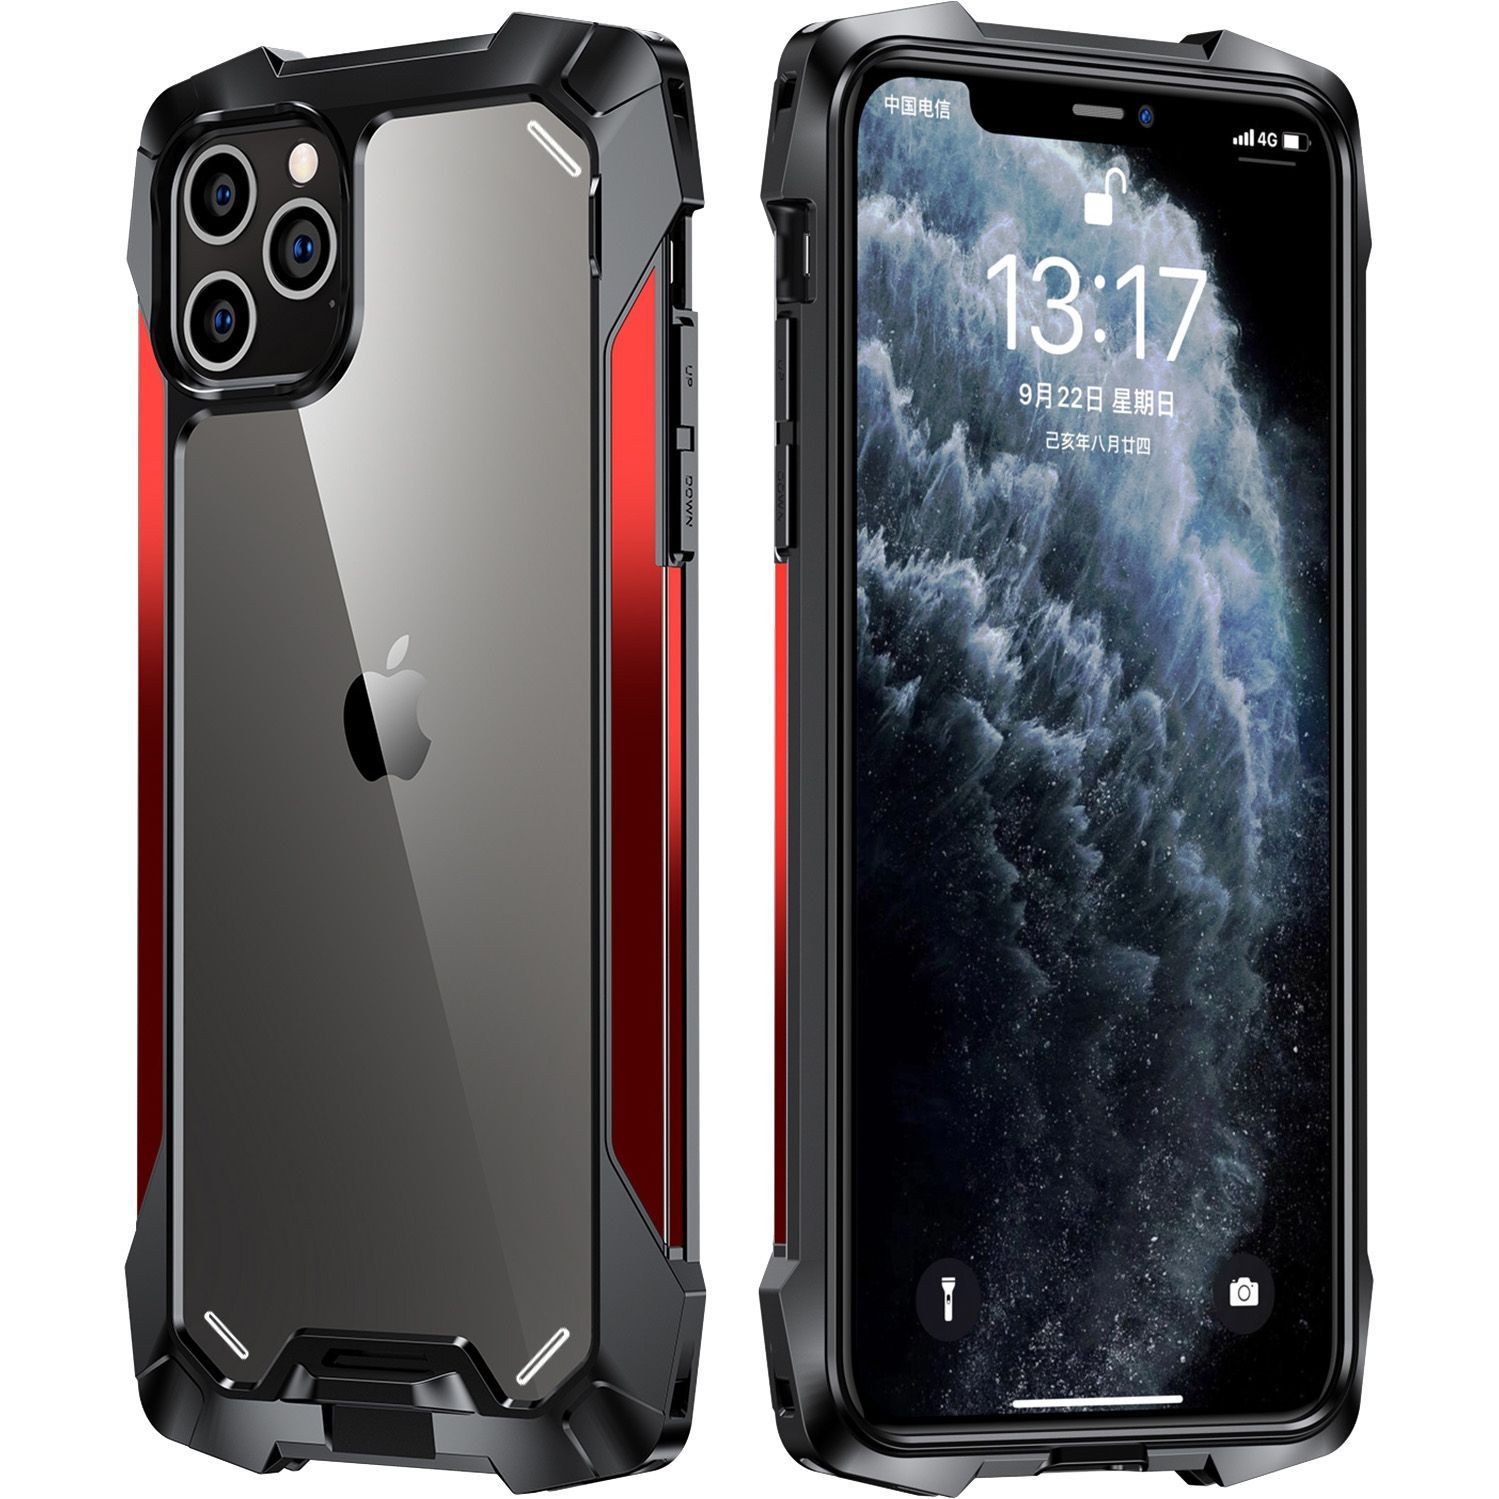 Pack x12 MULTICOLOR Carcasa Silicona Case Compatible con iPhone 11, LifeMax*